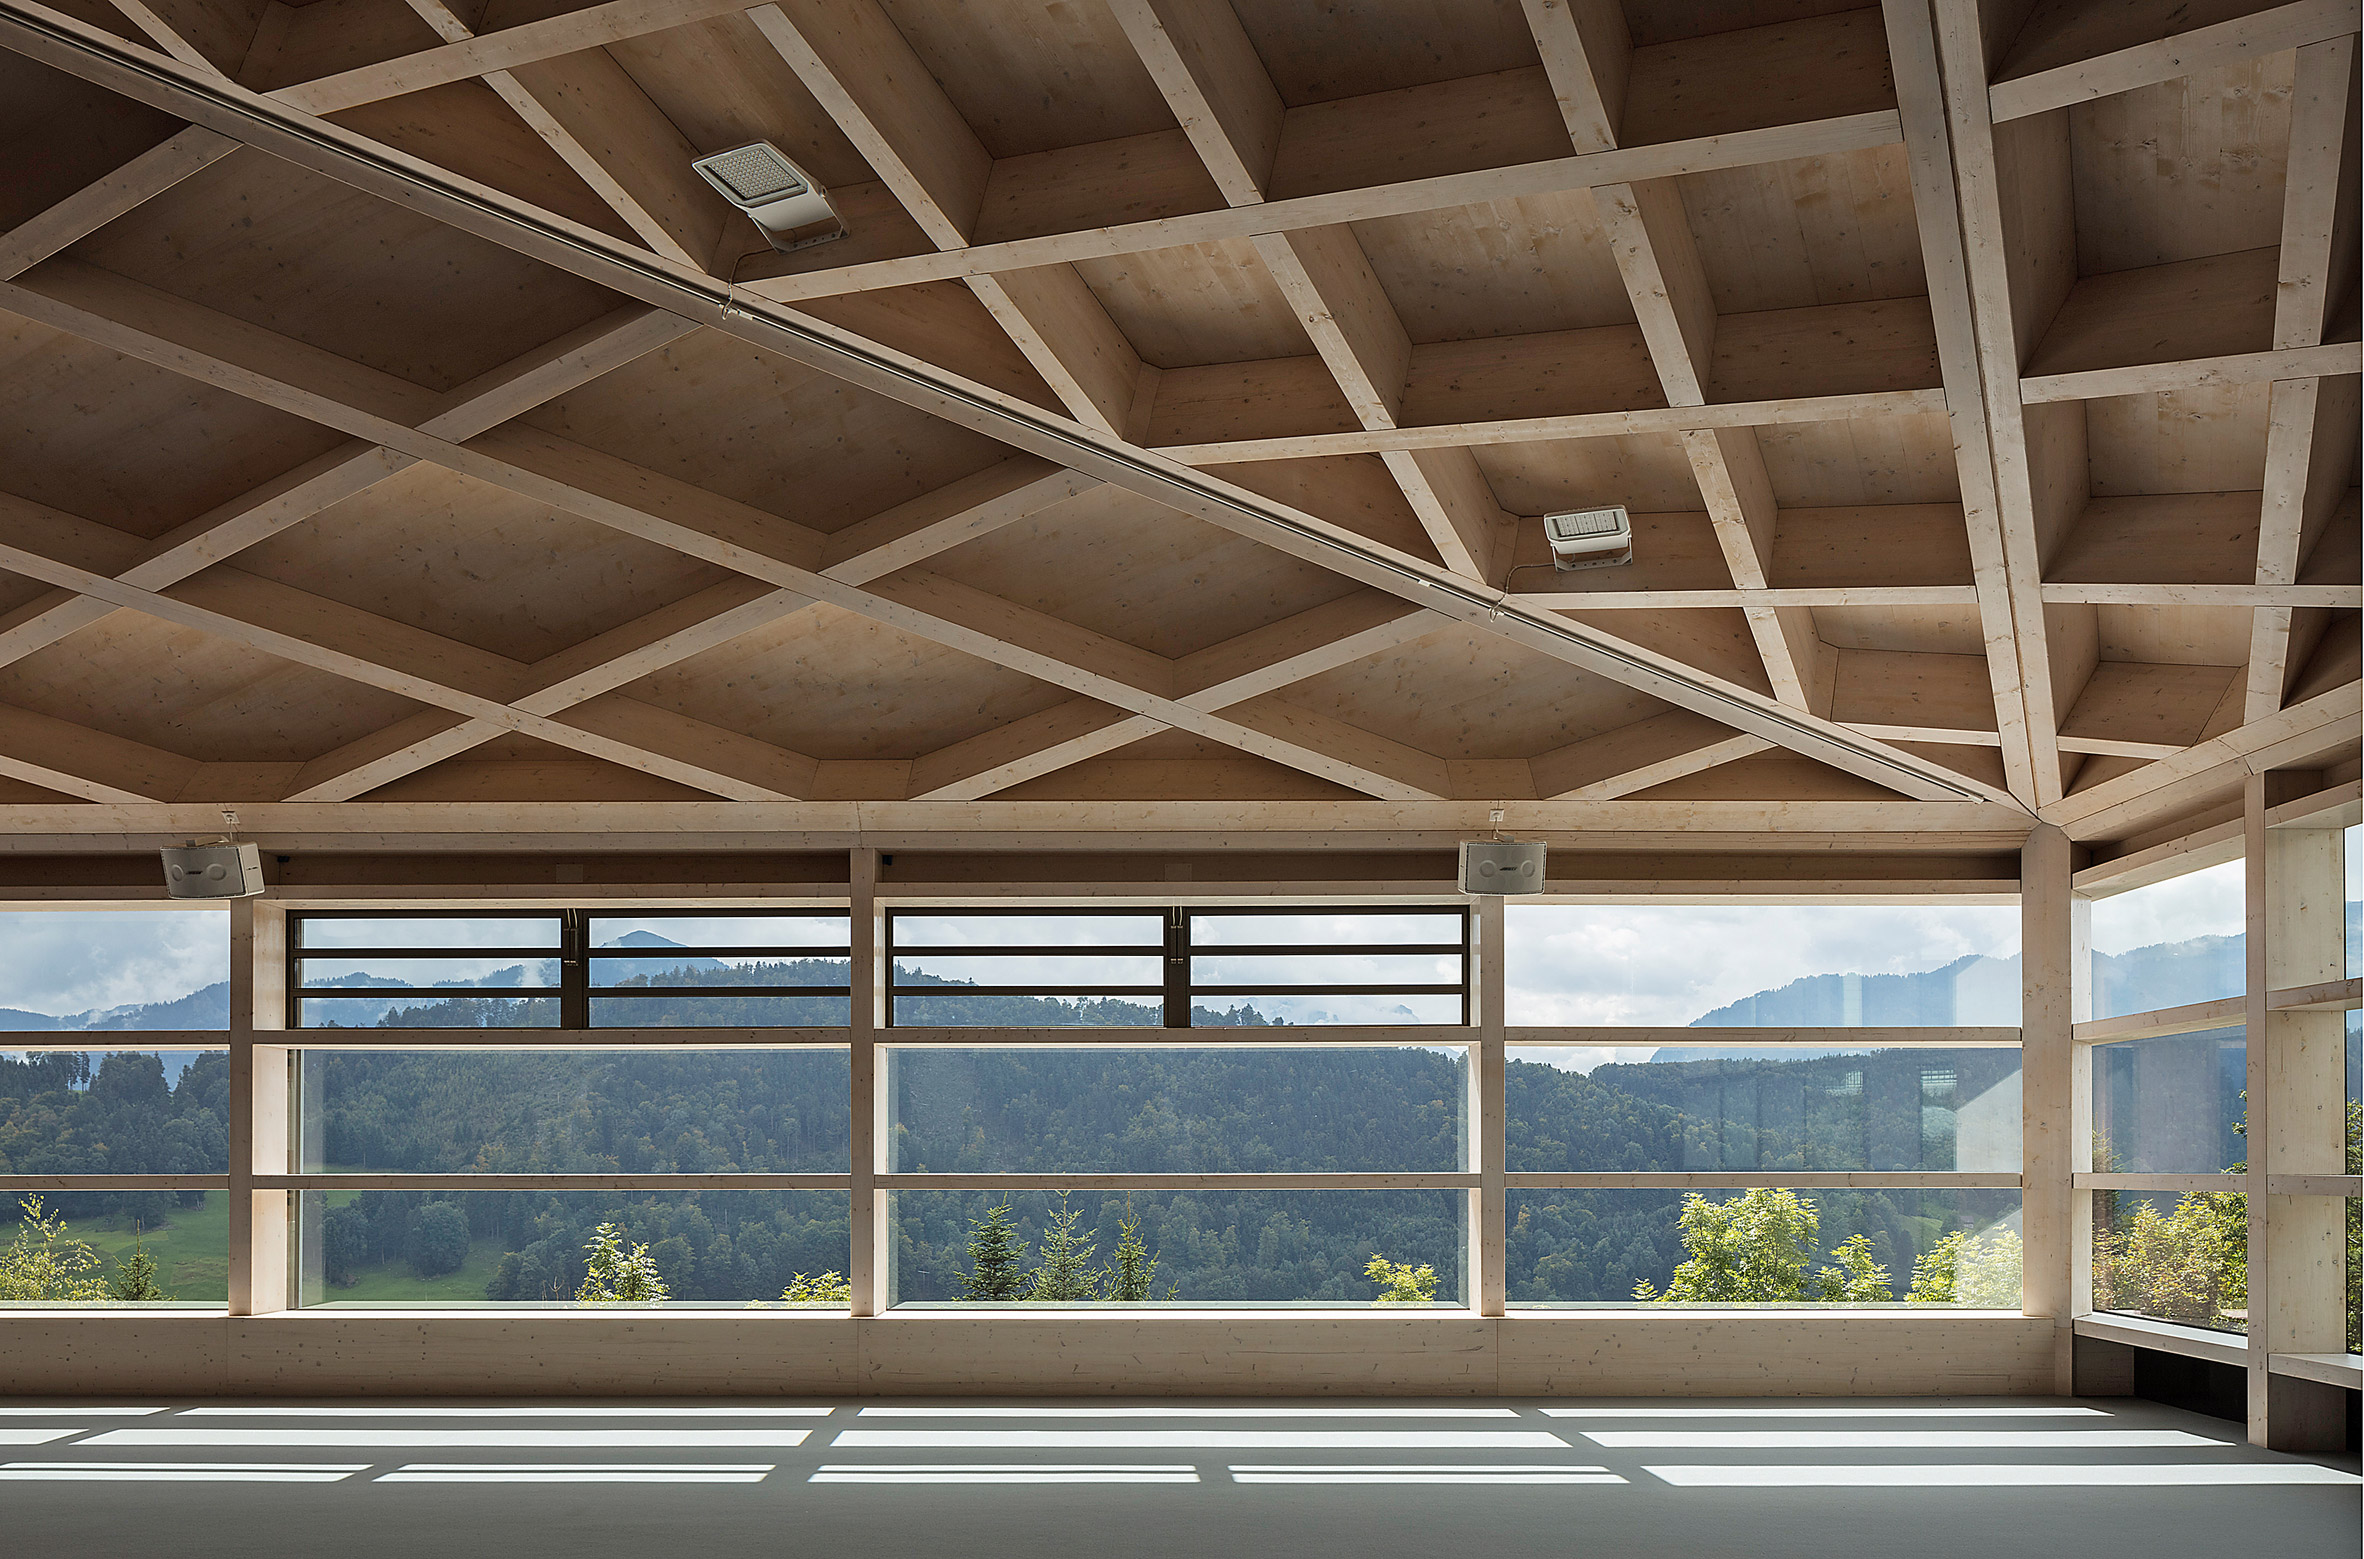 Windows of Diamond Domes tennis courts designed by Rüssli Architekten with CLT roofs by Neue Holzbau in the Swiss Alps